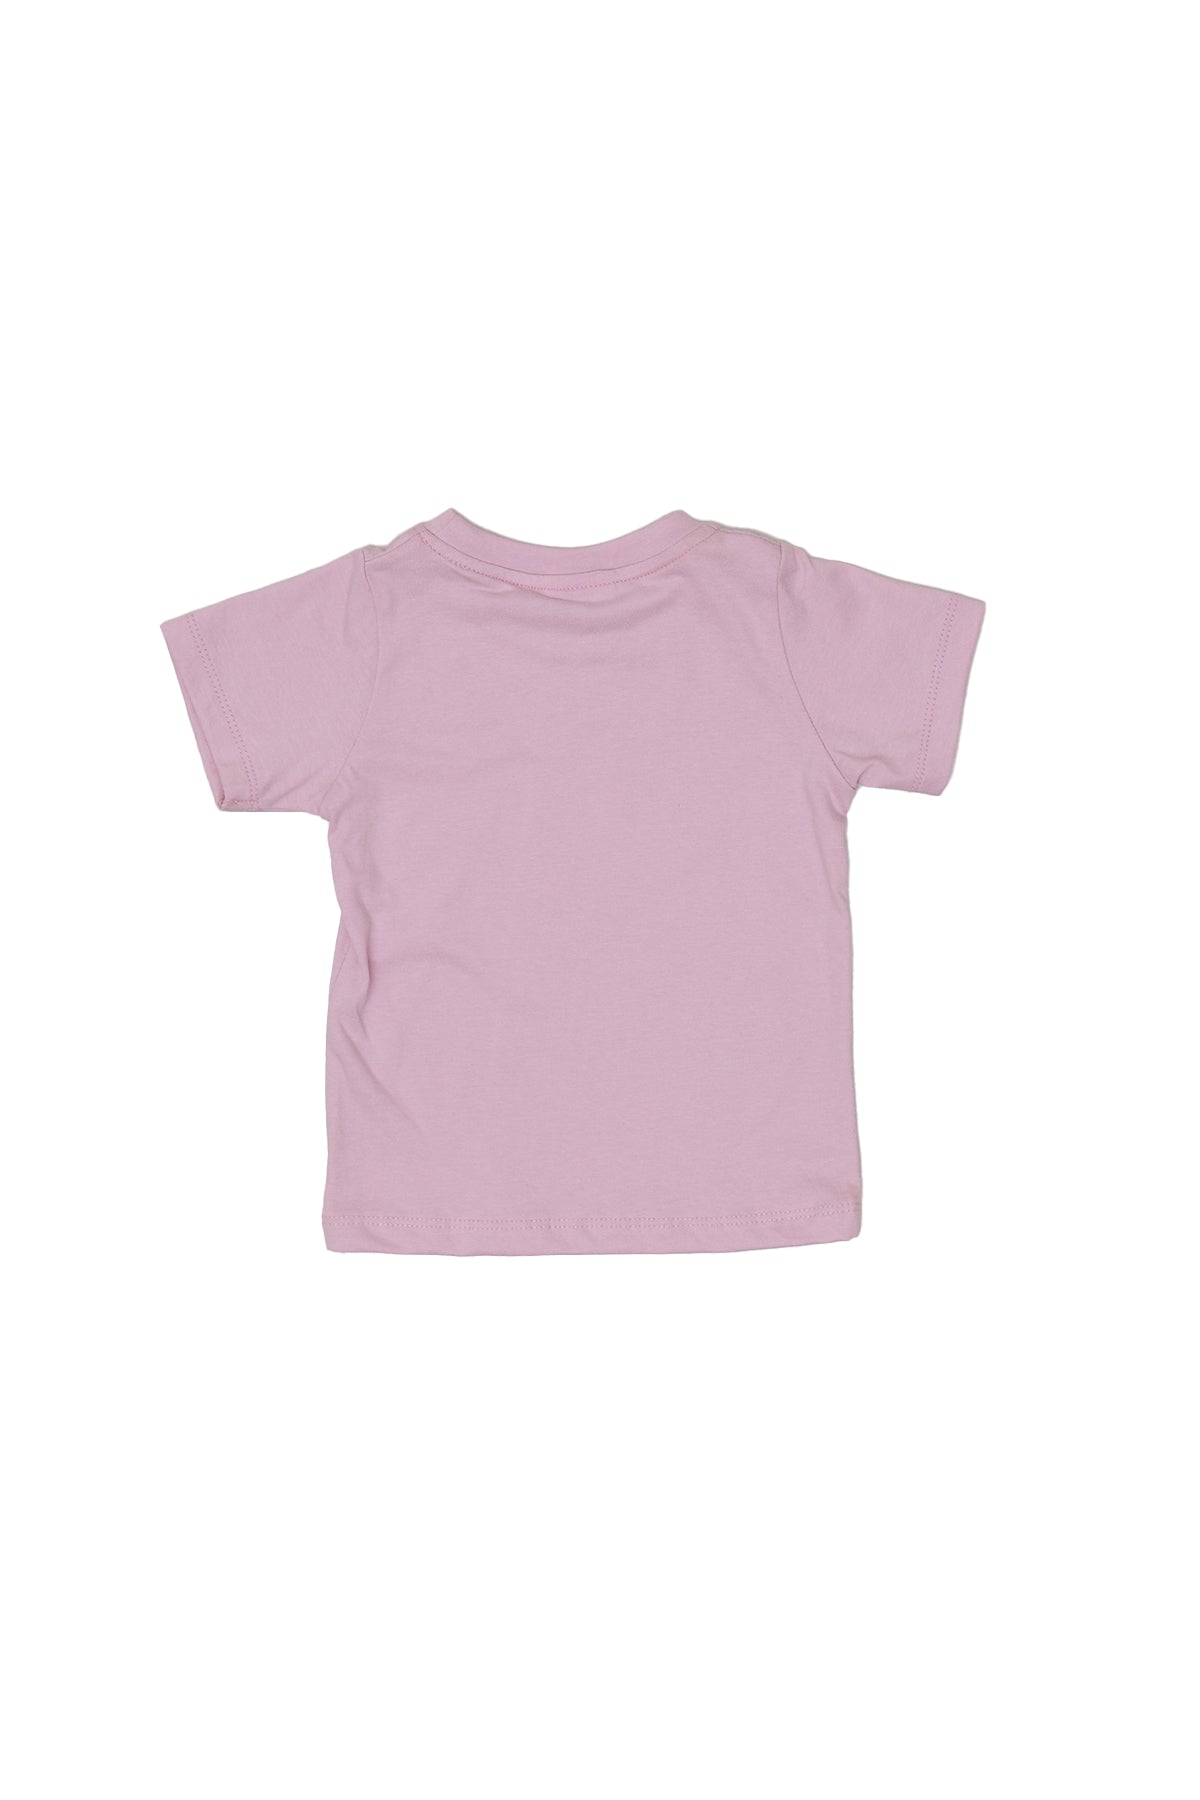 Ozone Baby Boys Short Sleeve Casual T-Shirt